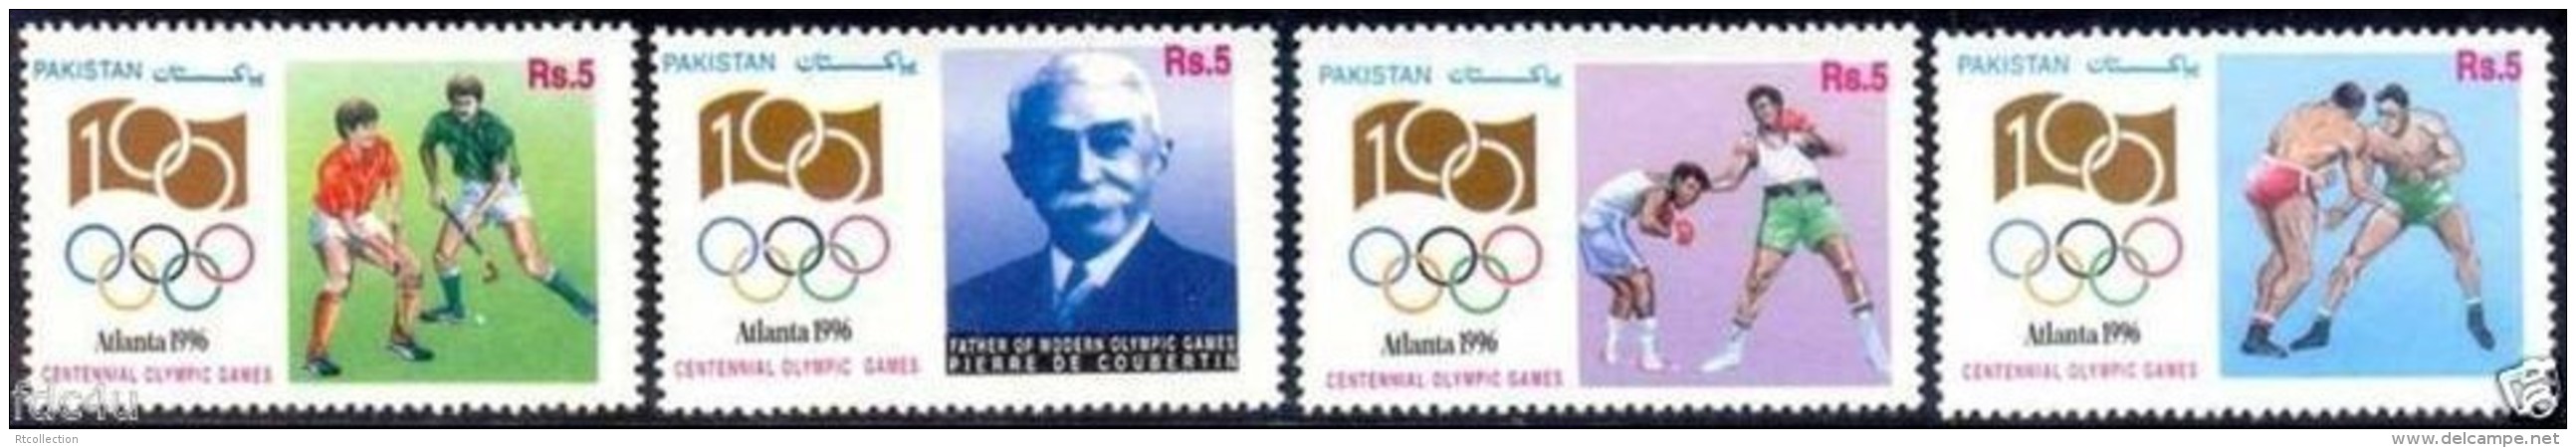 Pakistan 1996 Summer Atlanta Olympic Games Olympics Hockey Wrestling Boxing Sports Stamps MNH SG 1002-1005 - Pakistan